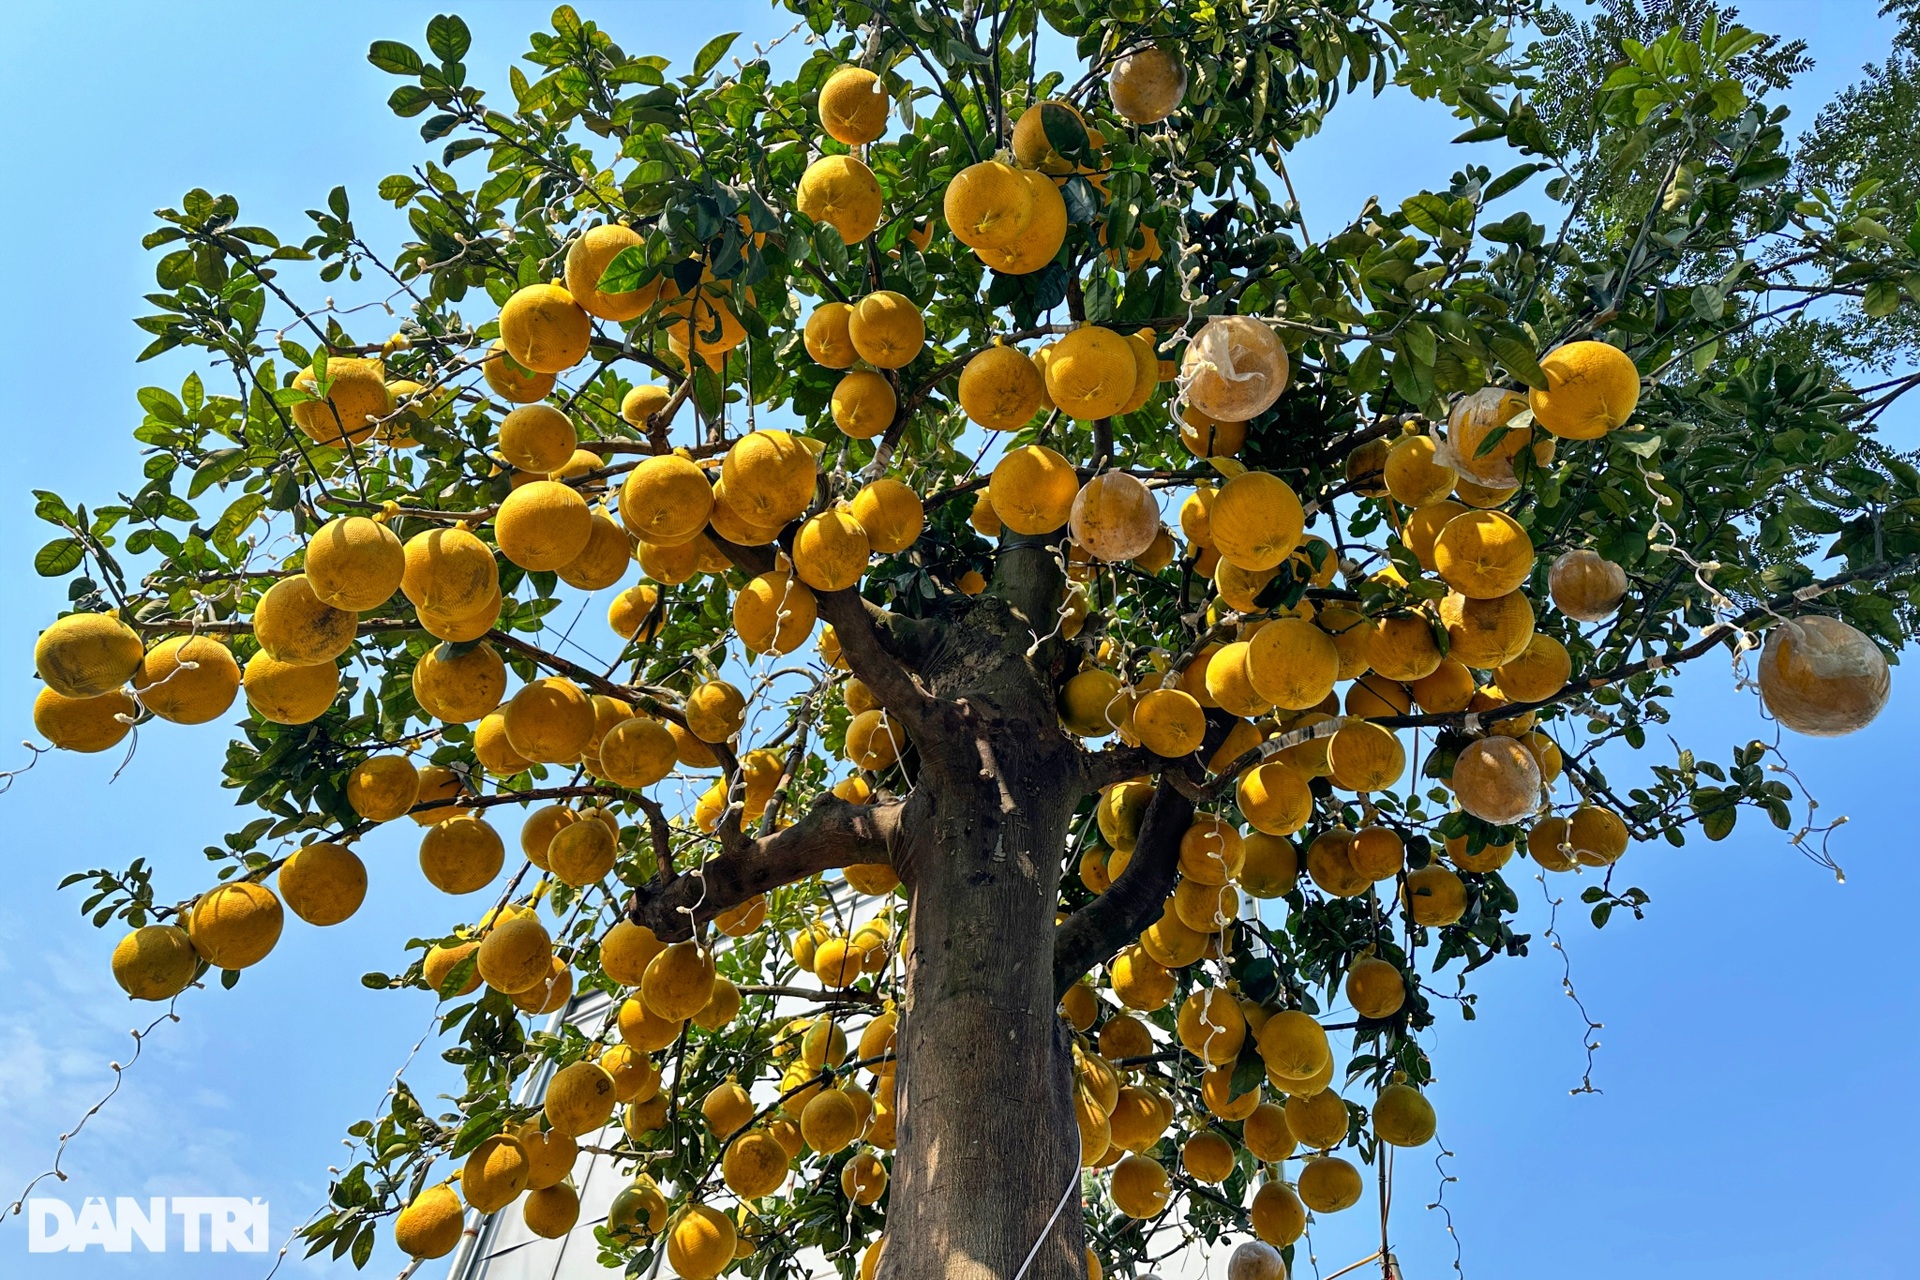 Unique 400-fruit Dien pomelo tree for sale for 200 million dong in Hanoi - 5